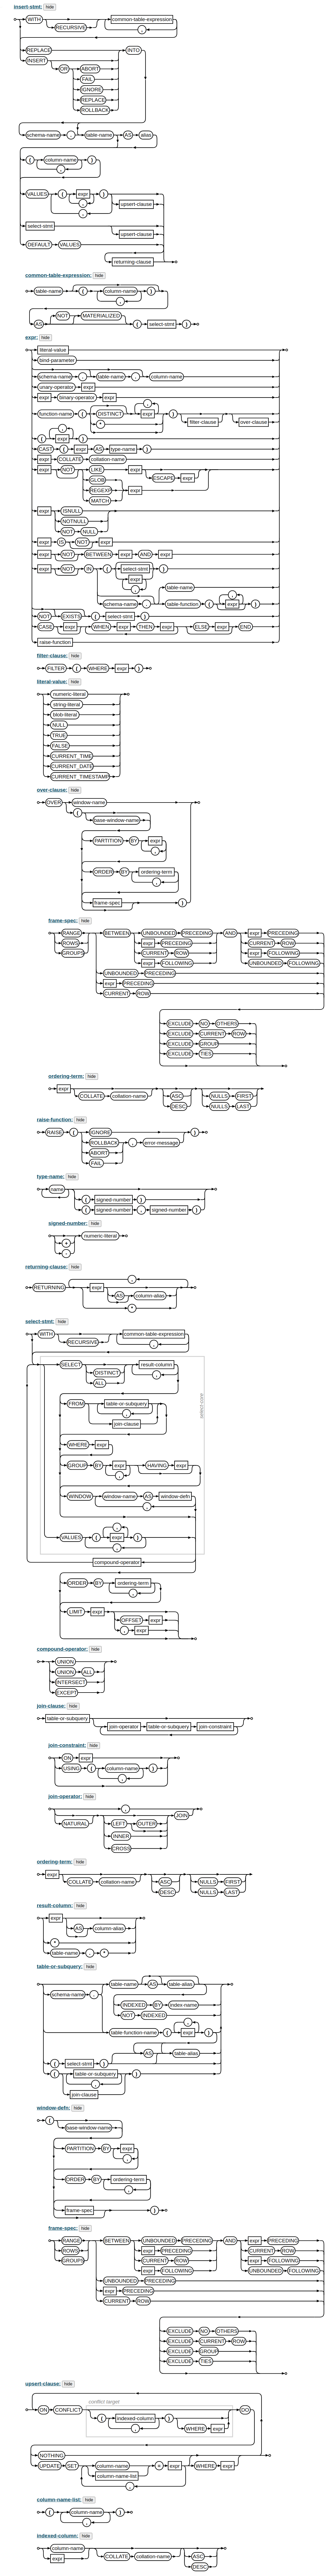 SQLite Insert Statement
Railroad Diagram